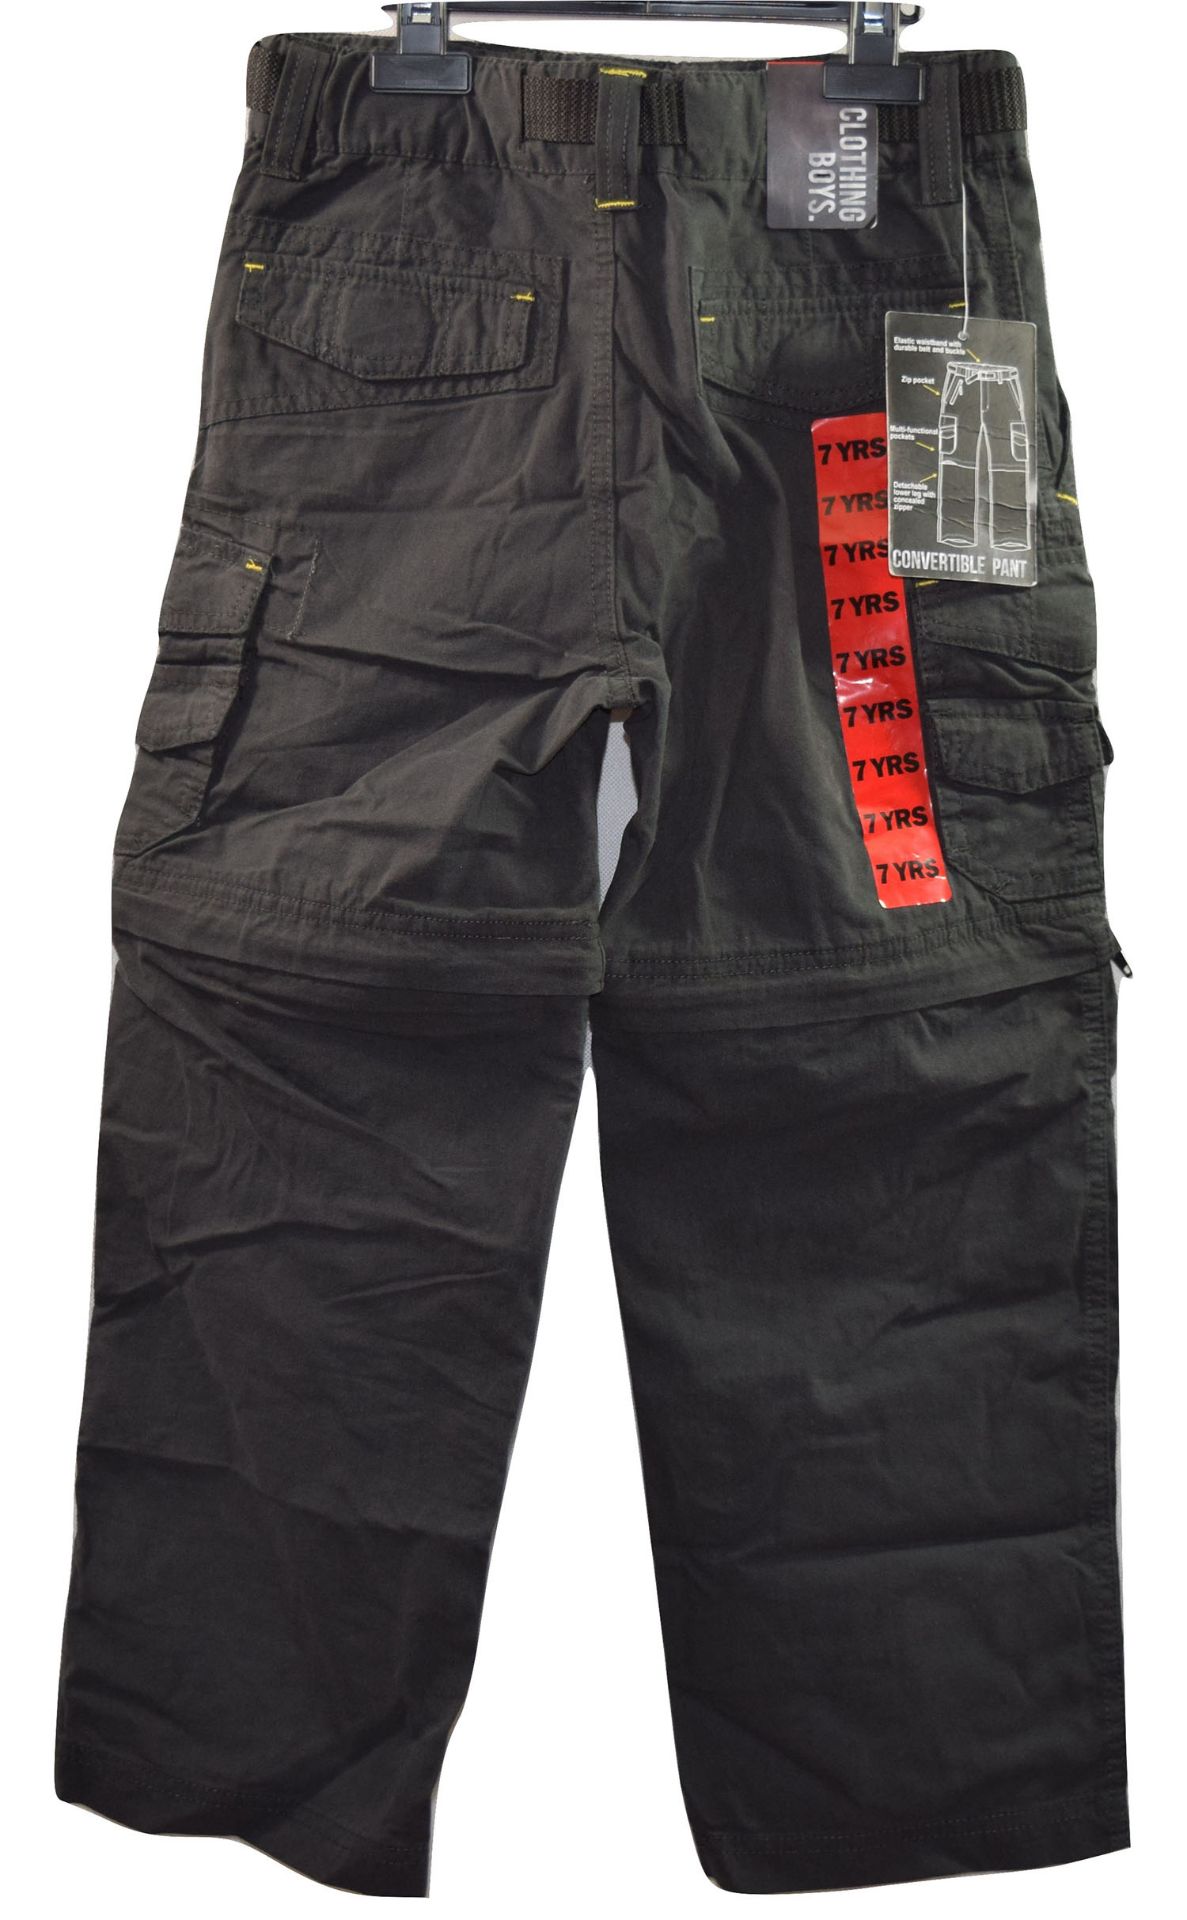 4 x Brand New Boy's BC Clothing Convertible Pants RRP £64